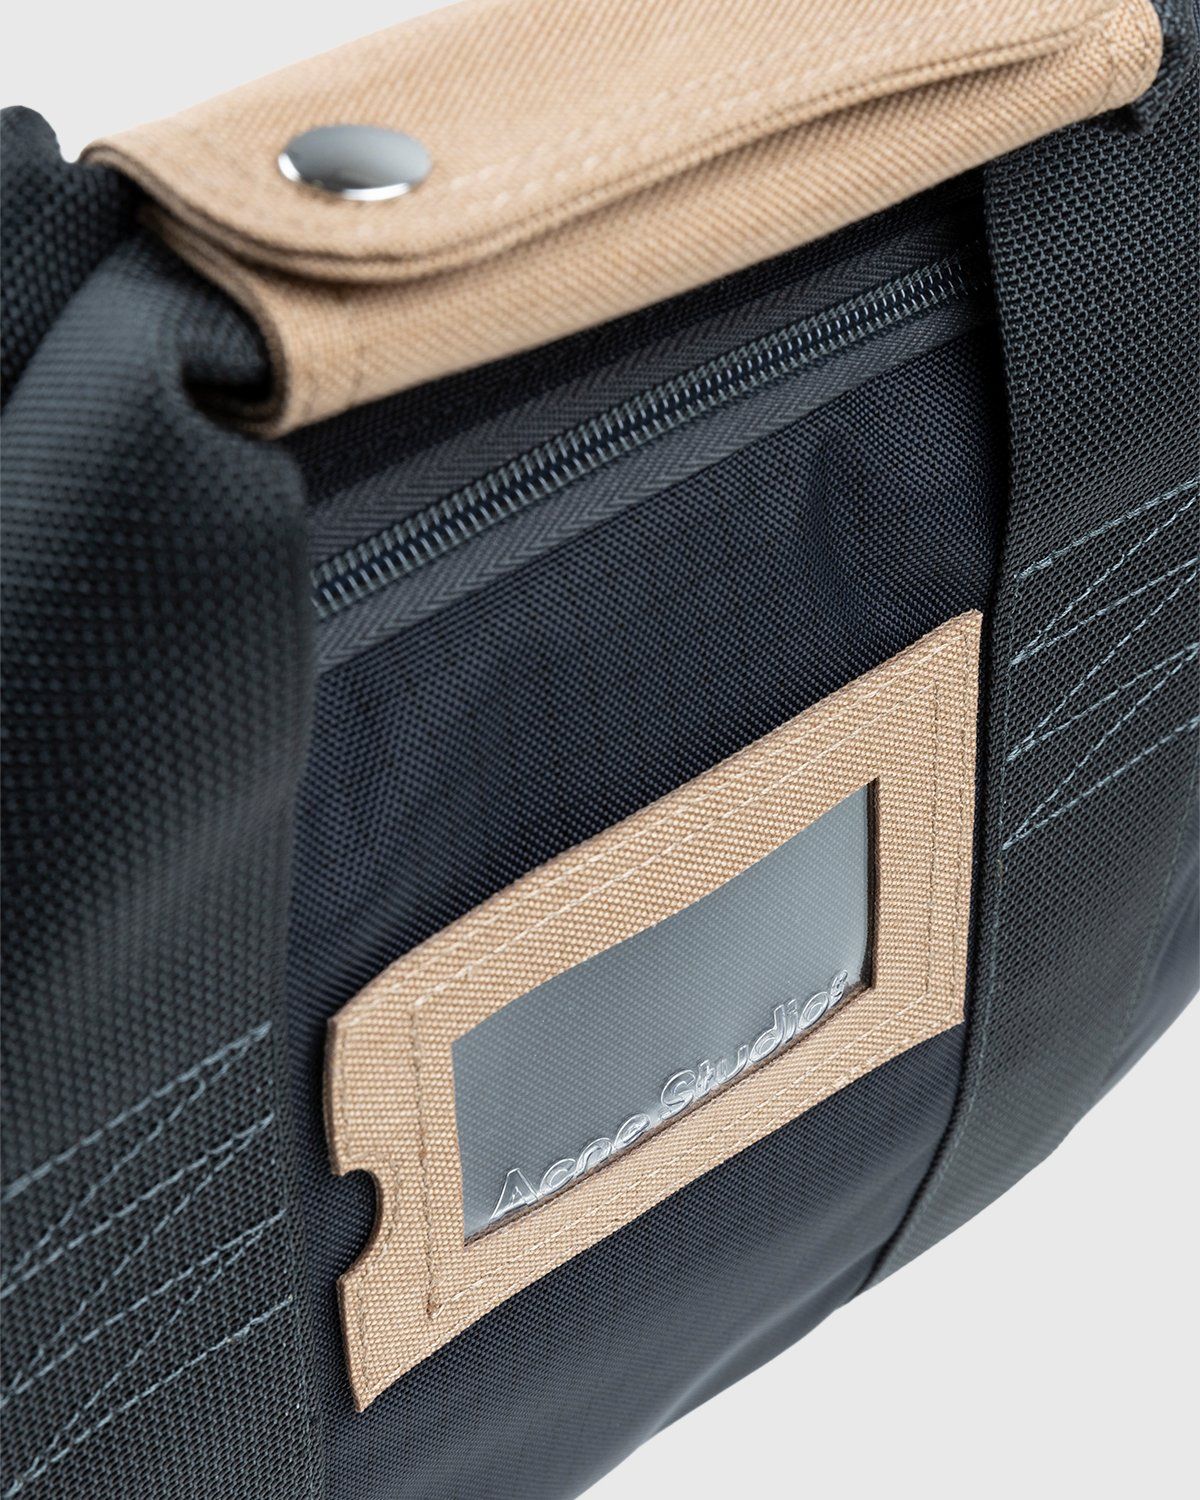 Acne Studios – Nylon Crossbody Laptop Bag Black/Khaki Green - Bags - Black - Image 7